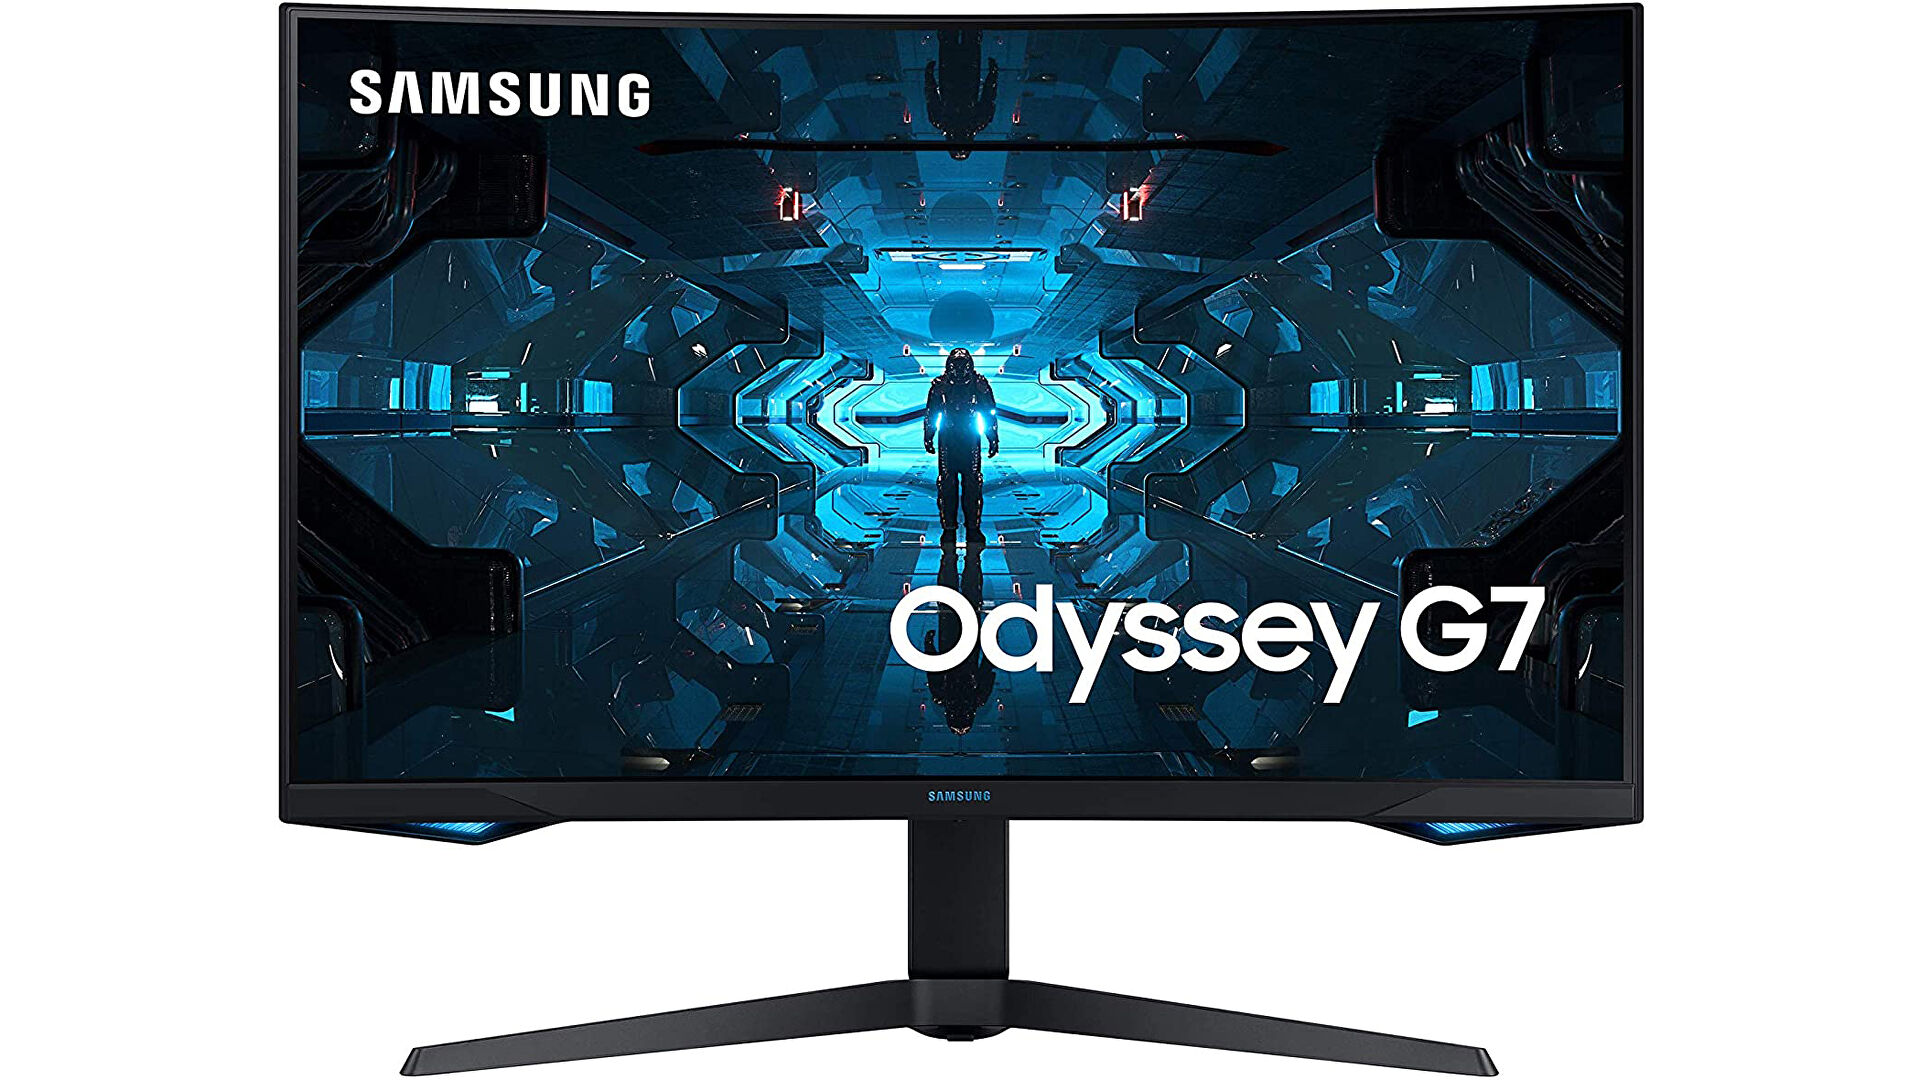 Samsung’s Odyssey G7 1440p 240Hz monitor is down to £429